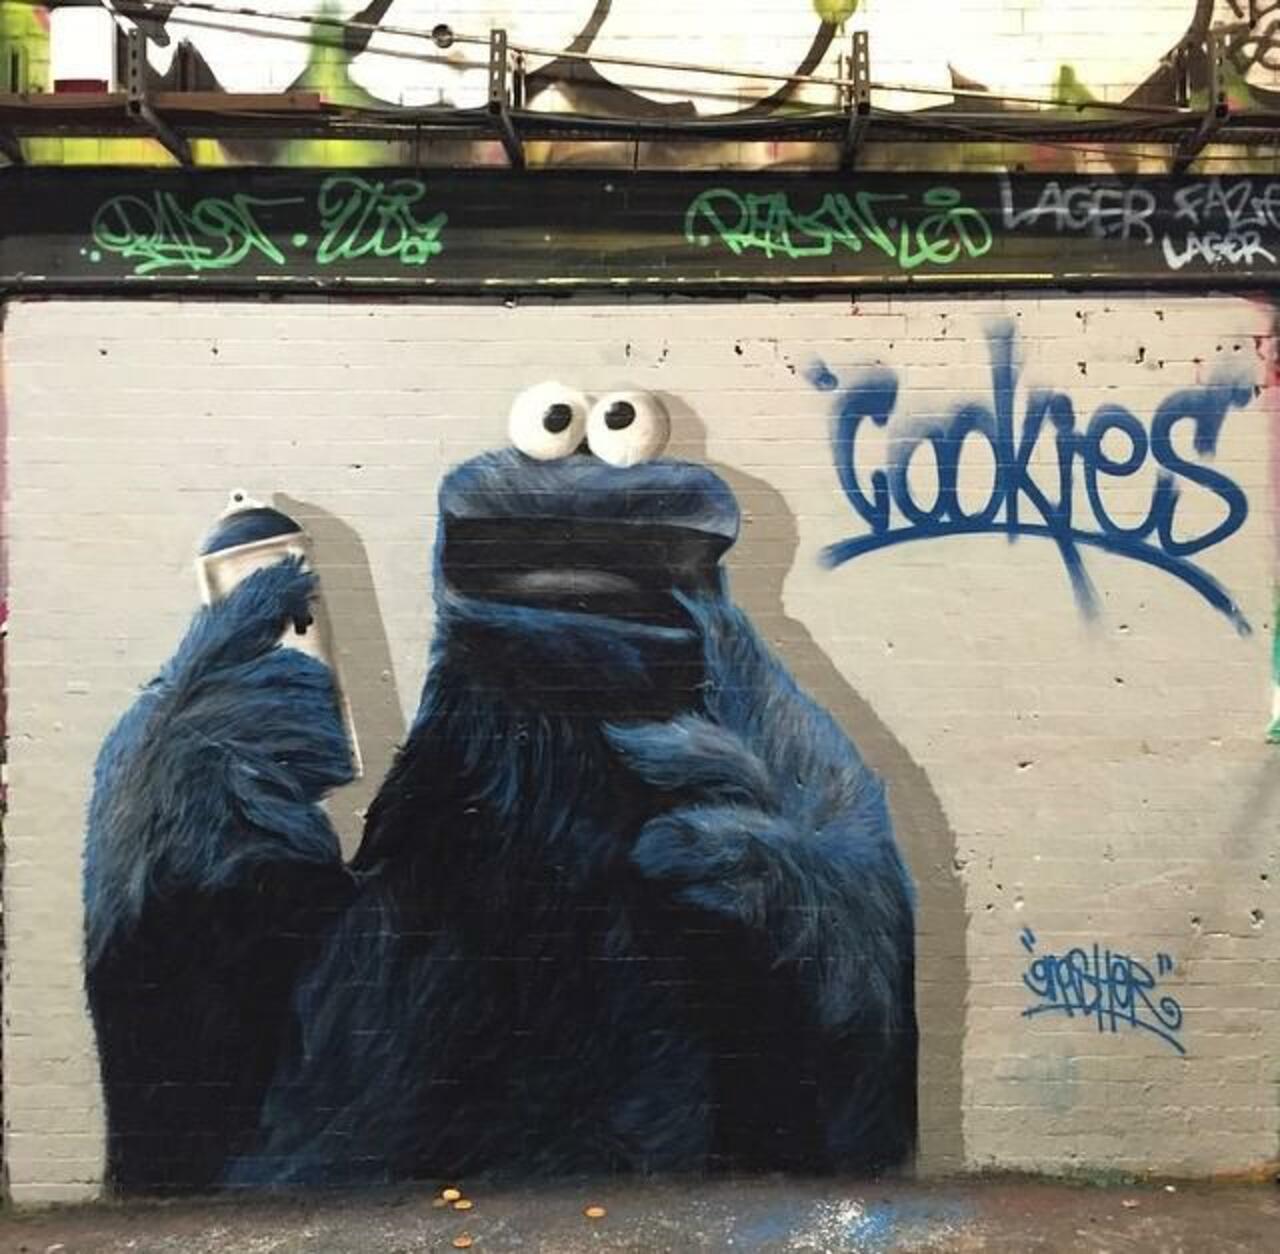 Cookies!

The Cookie Monster in Street Art by Gnasher :)

#art #arte #graffiti #streetart http://t.co/pEgo2pHIPx